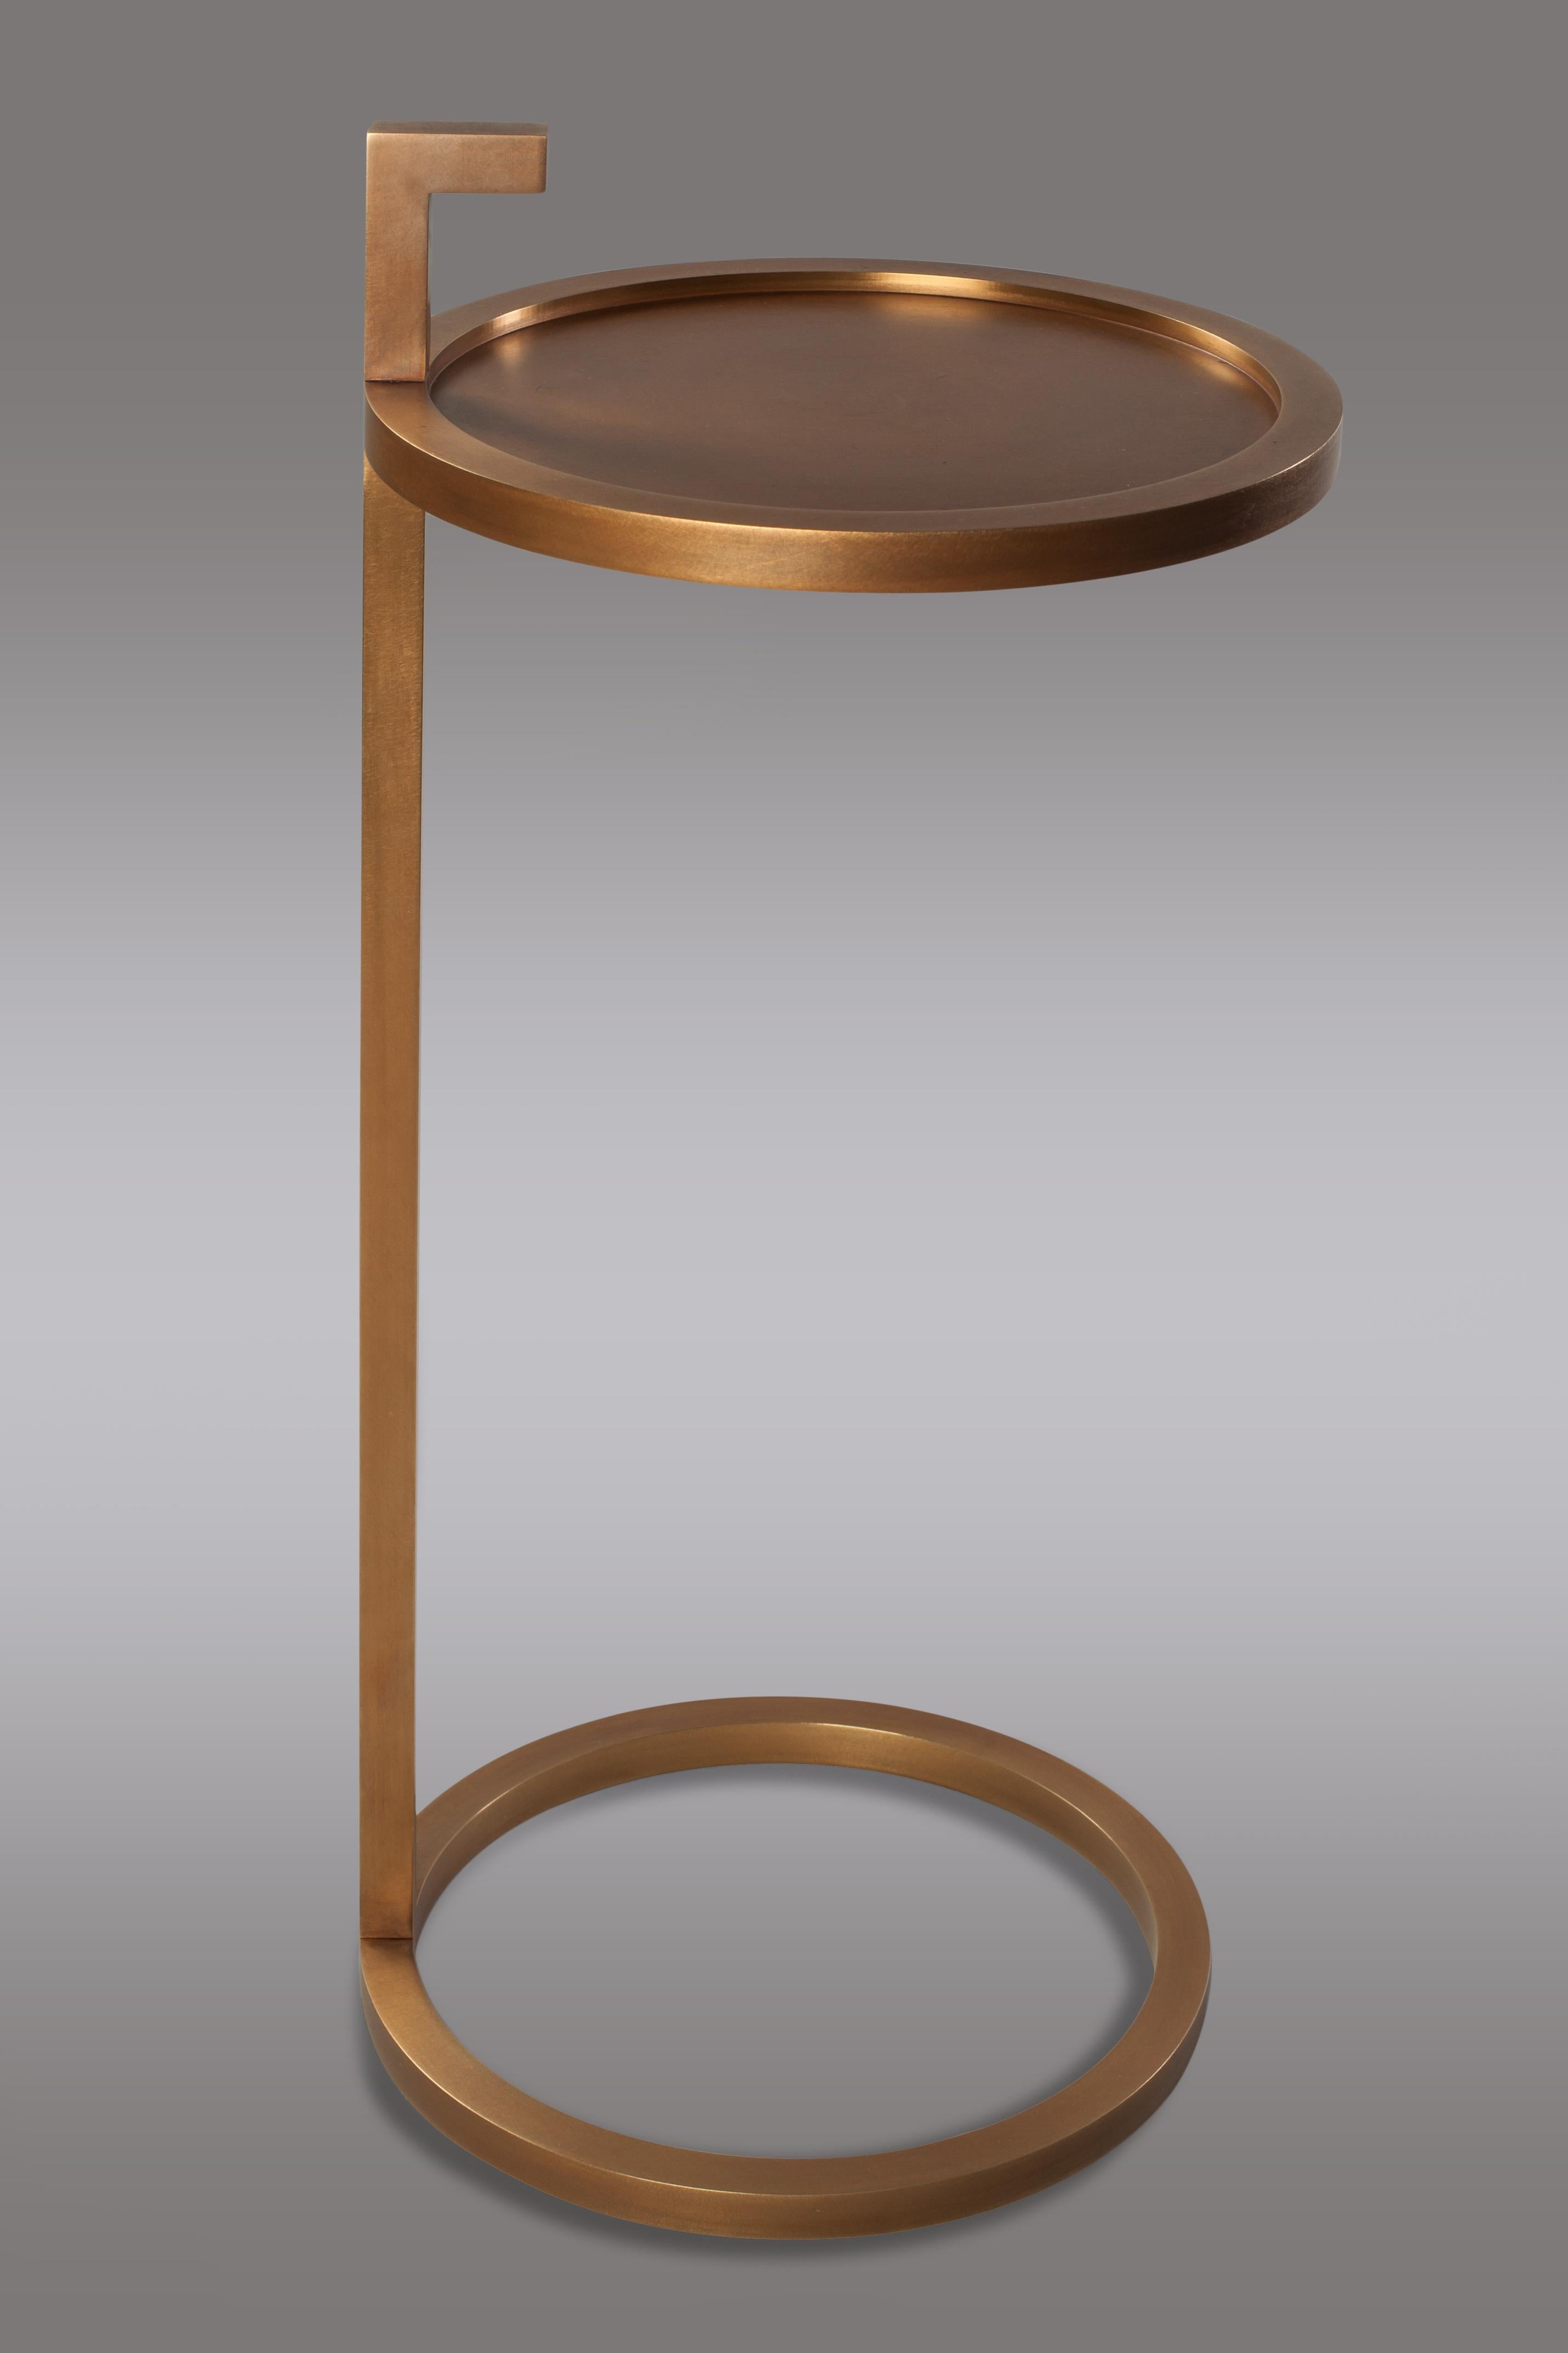 Contemporary Art Deco Inspired Kangaroo Martini Table Round Shape in Brass Tint